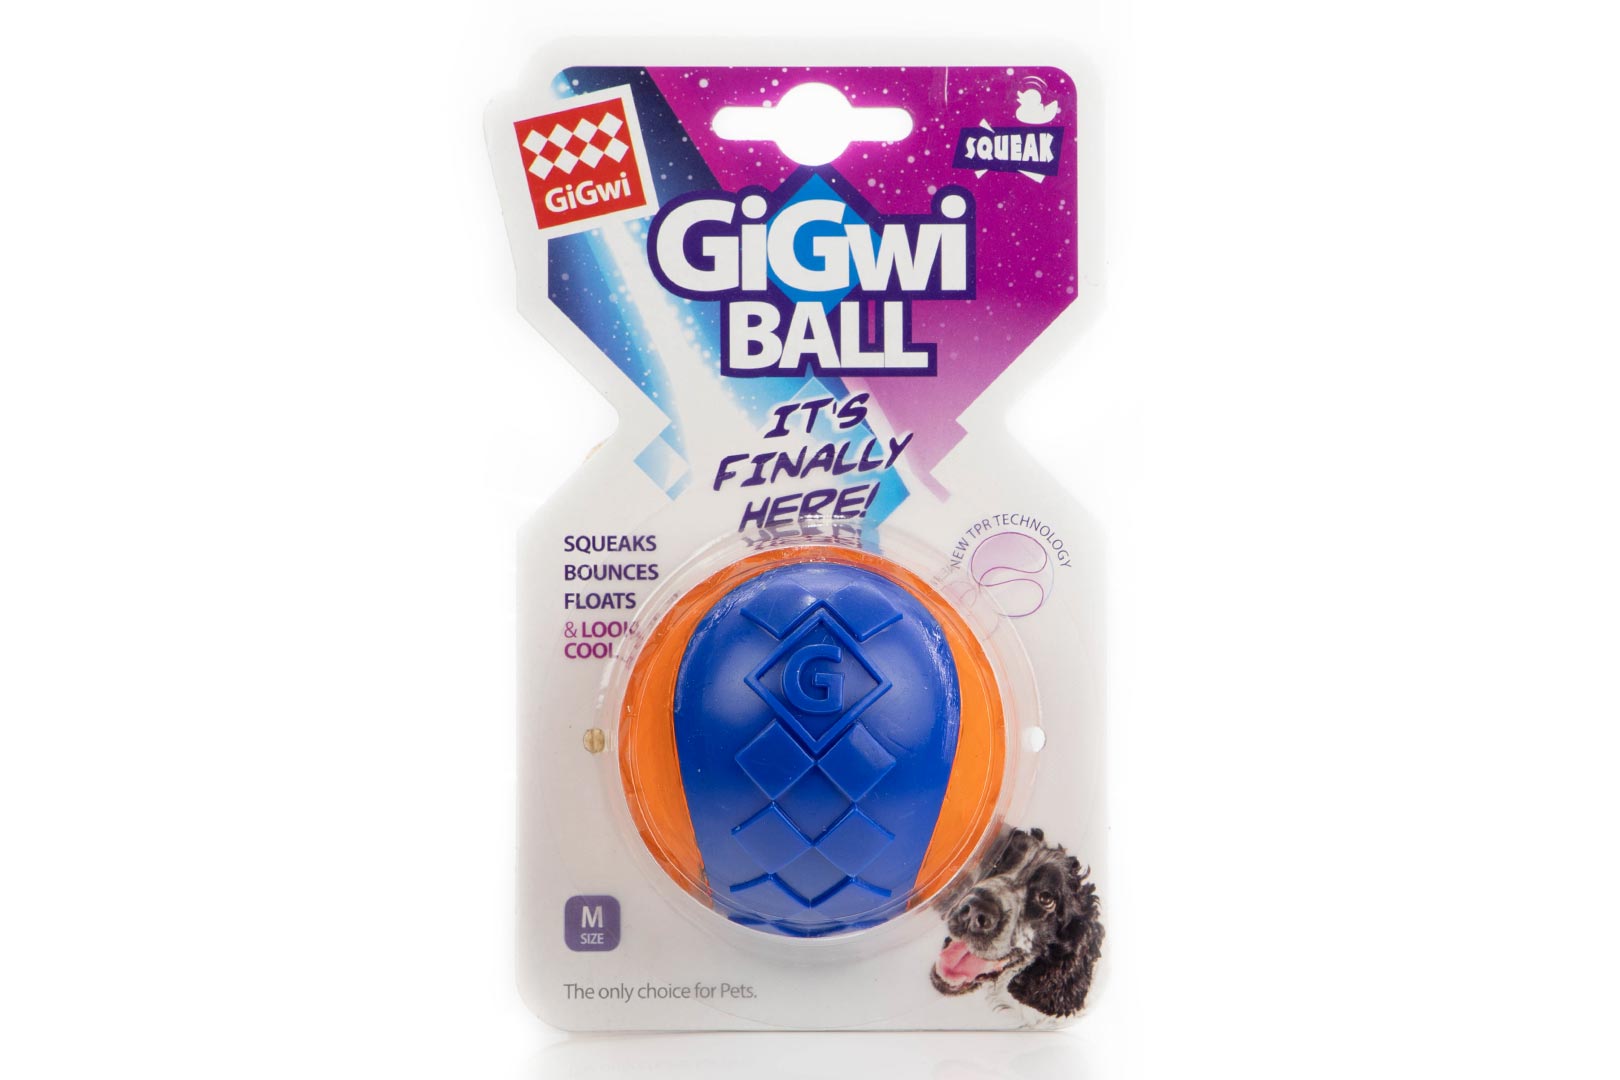 GIGWI BALL Míček, Velikost: M